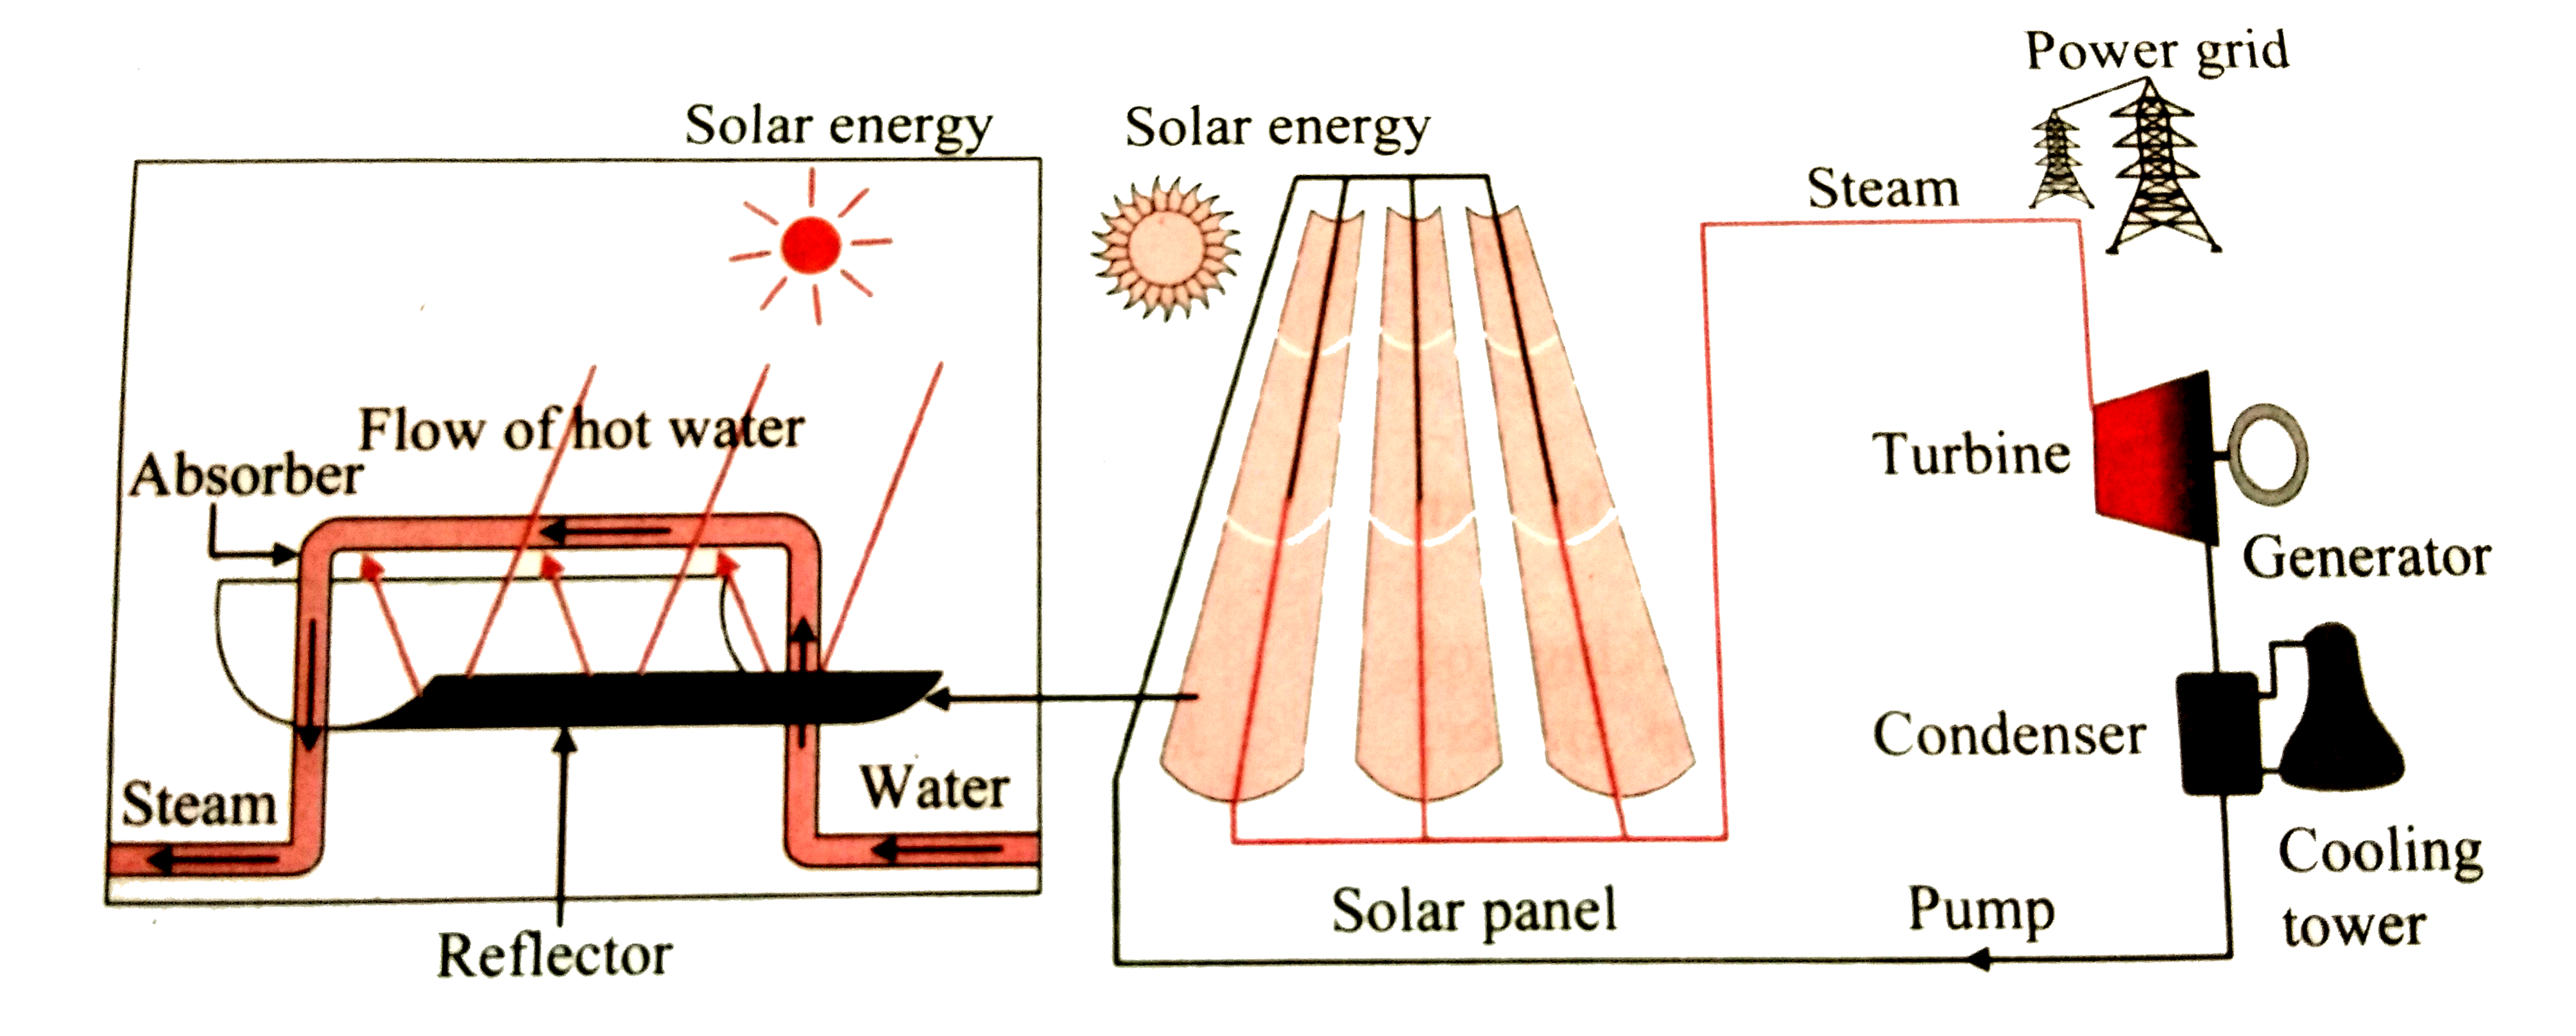 solar power plant schematic diagram